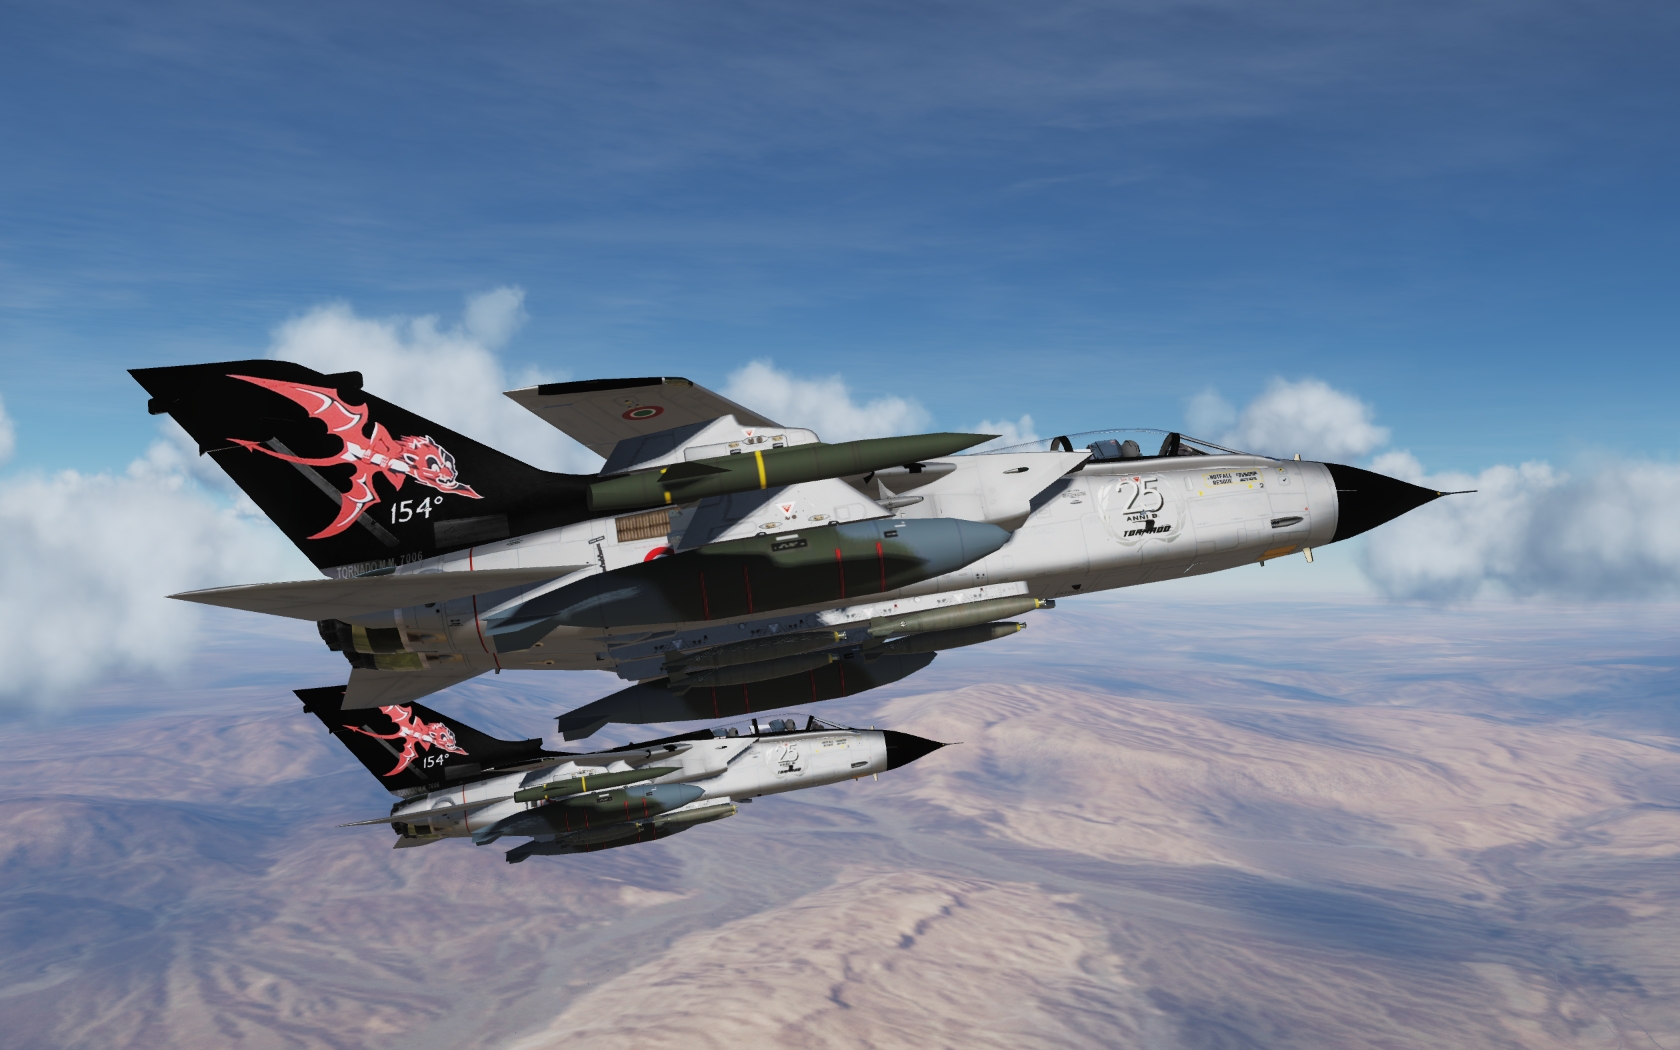 DCS WORLD 米格21比斯 + 米格29 + Tornado + A-10  混战游戏截图-9423 